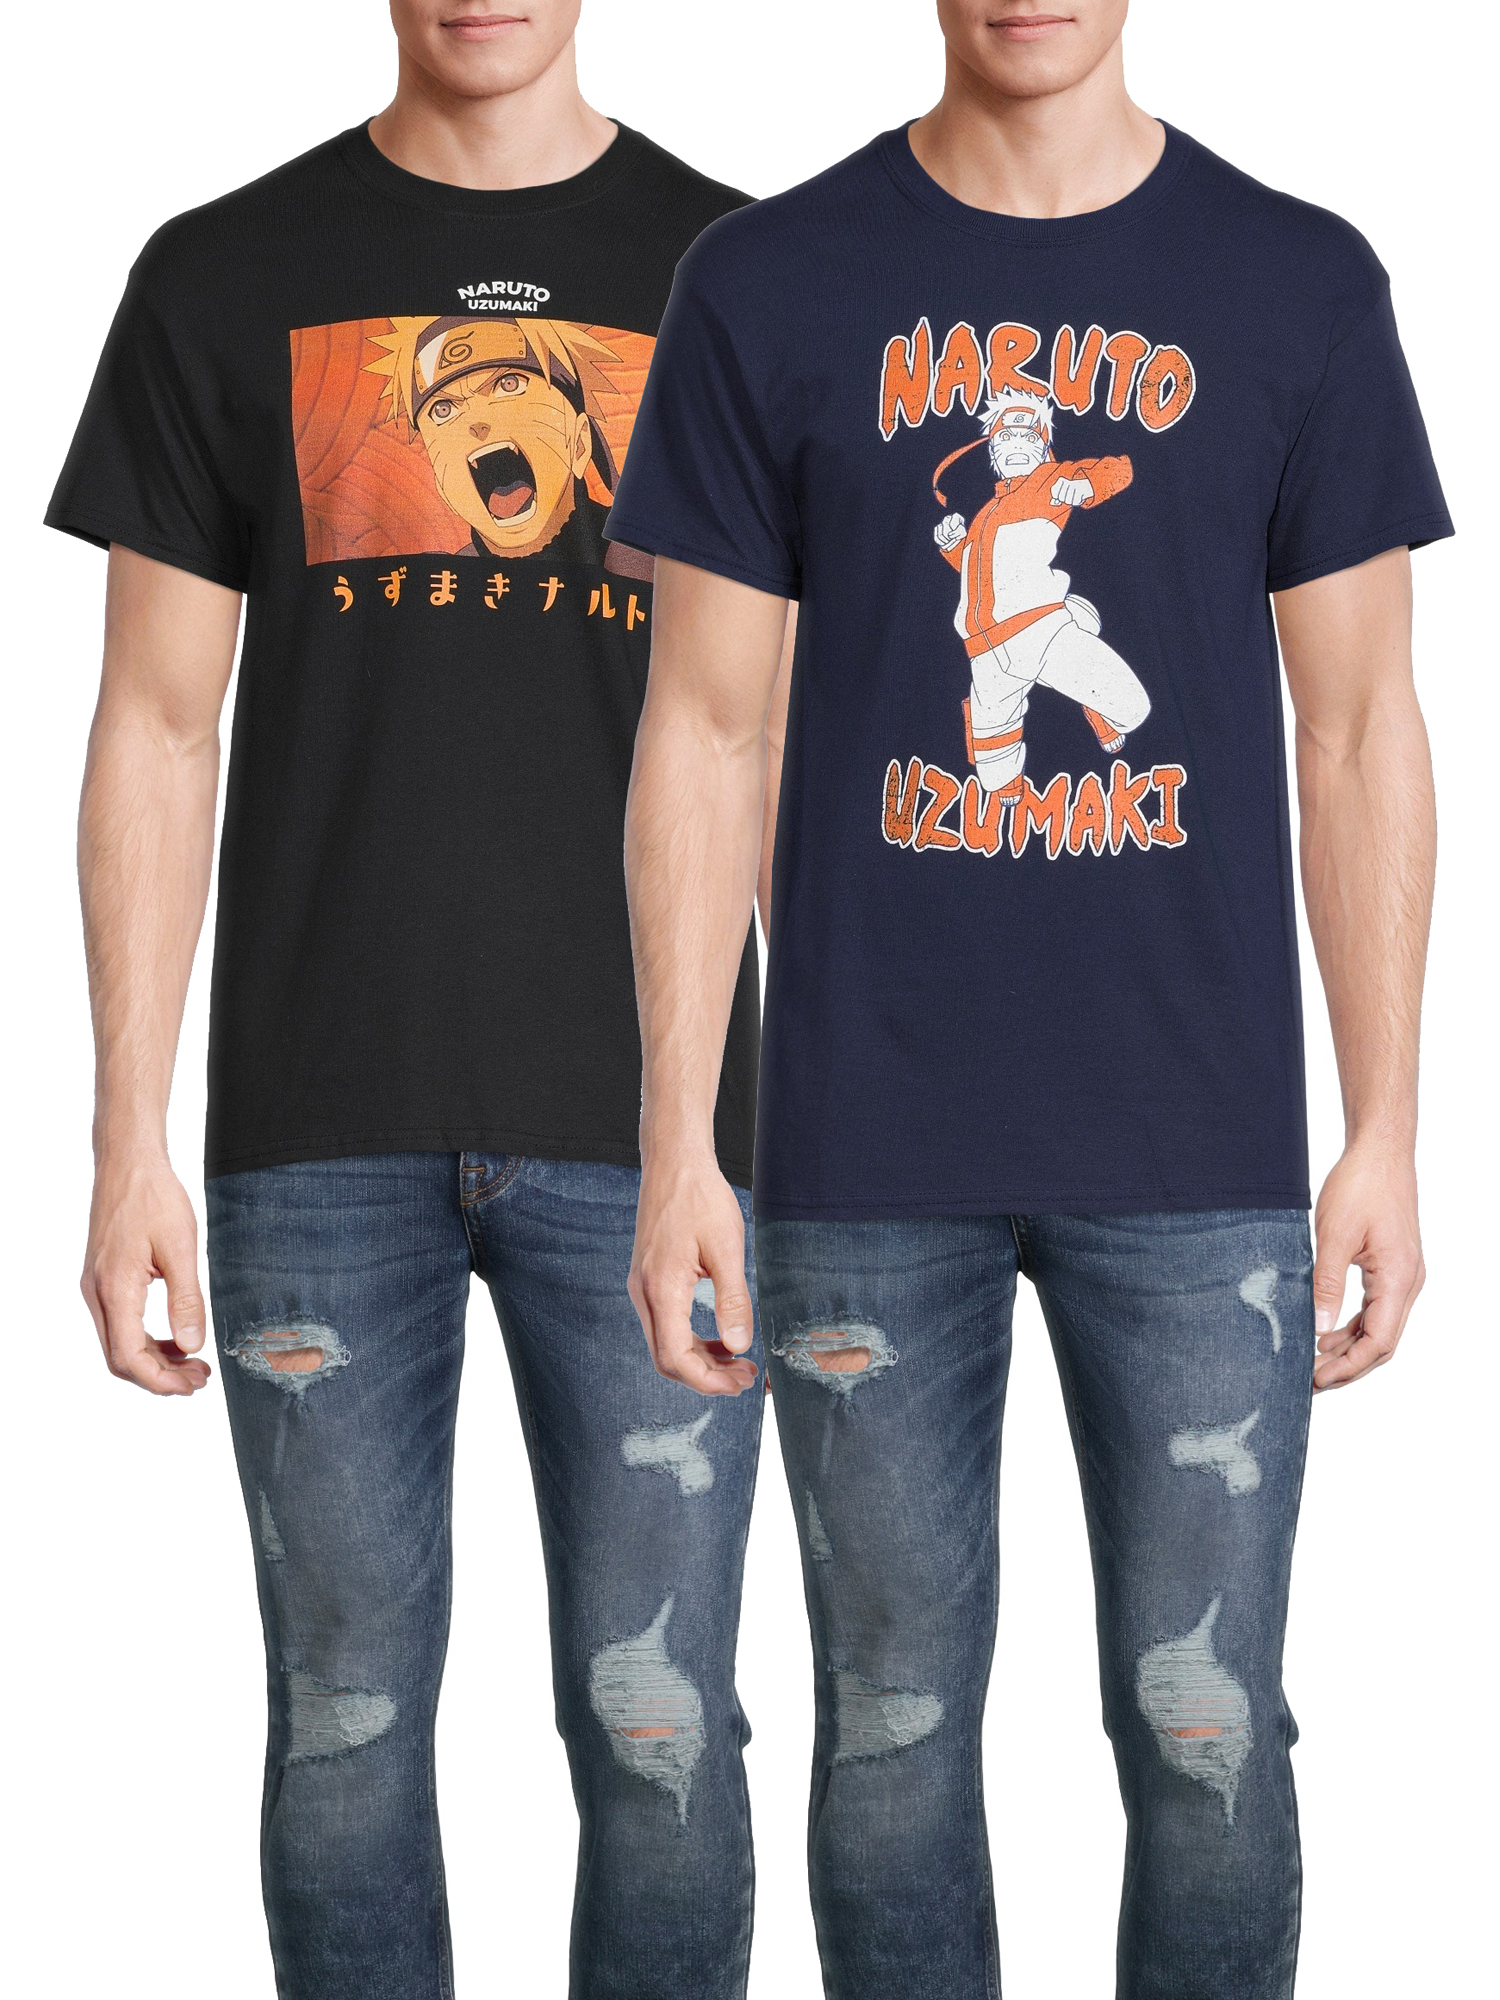 Naruto Men's & Big Men's Uzumaki Anime Graphic Tees Shirts, 2-Pack, Sizes S-3XL, Naruto Anime Mens T-Shirts - image 1 of 8